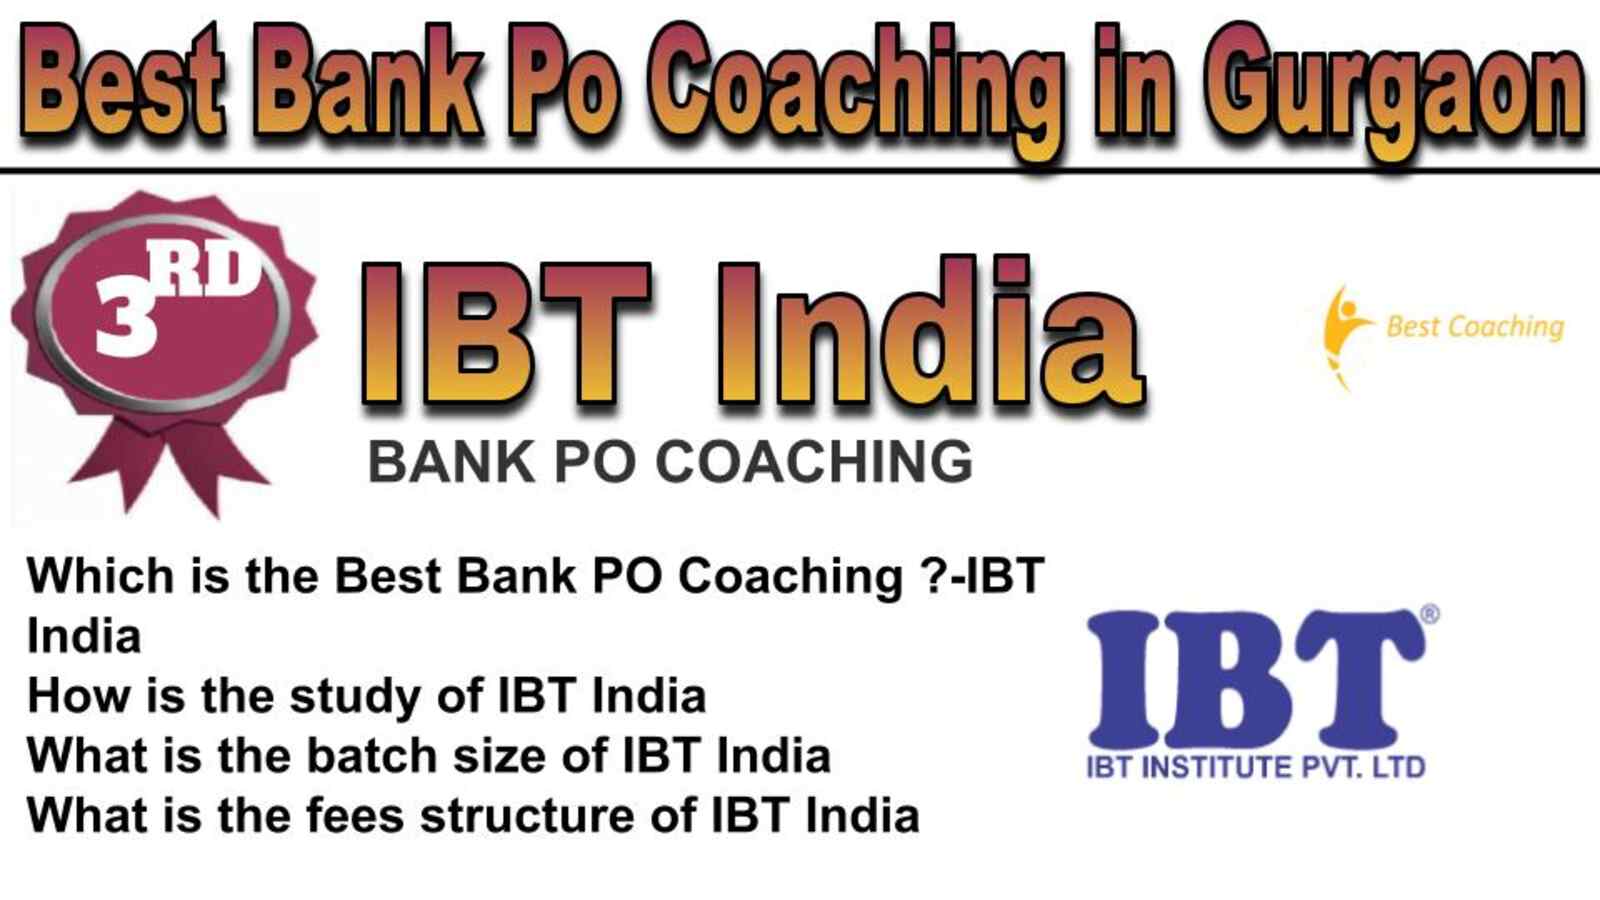 Rank 3 best bank Po coaching in Gurgaon